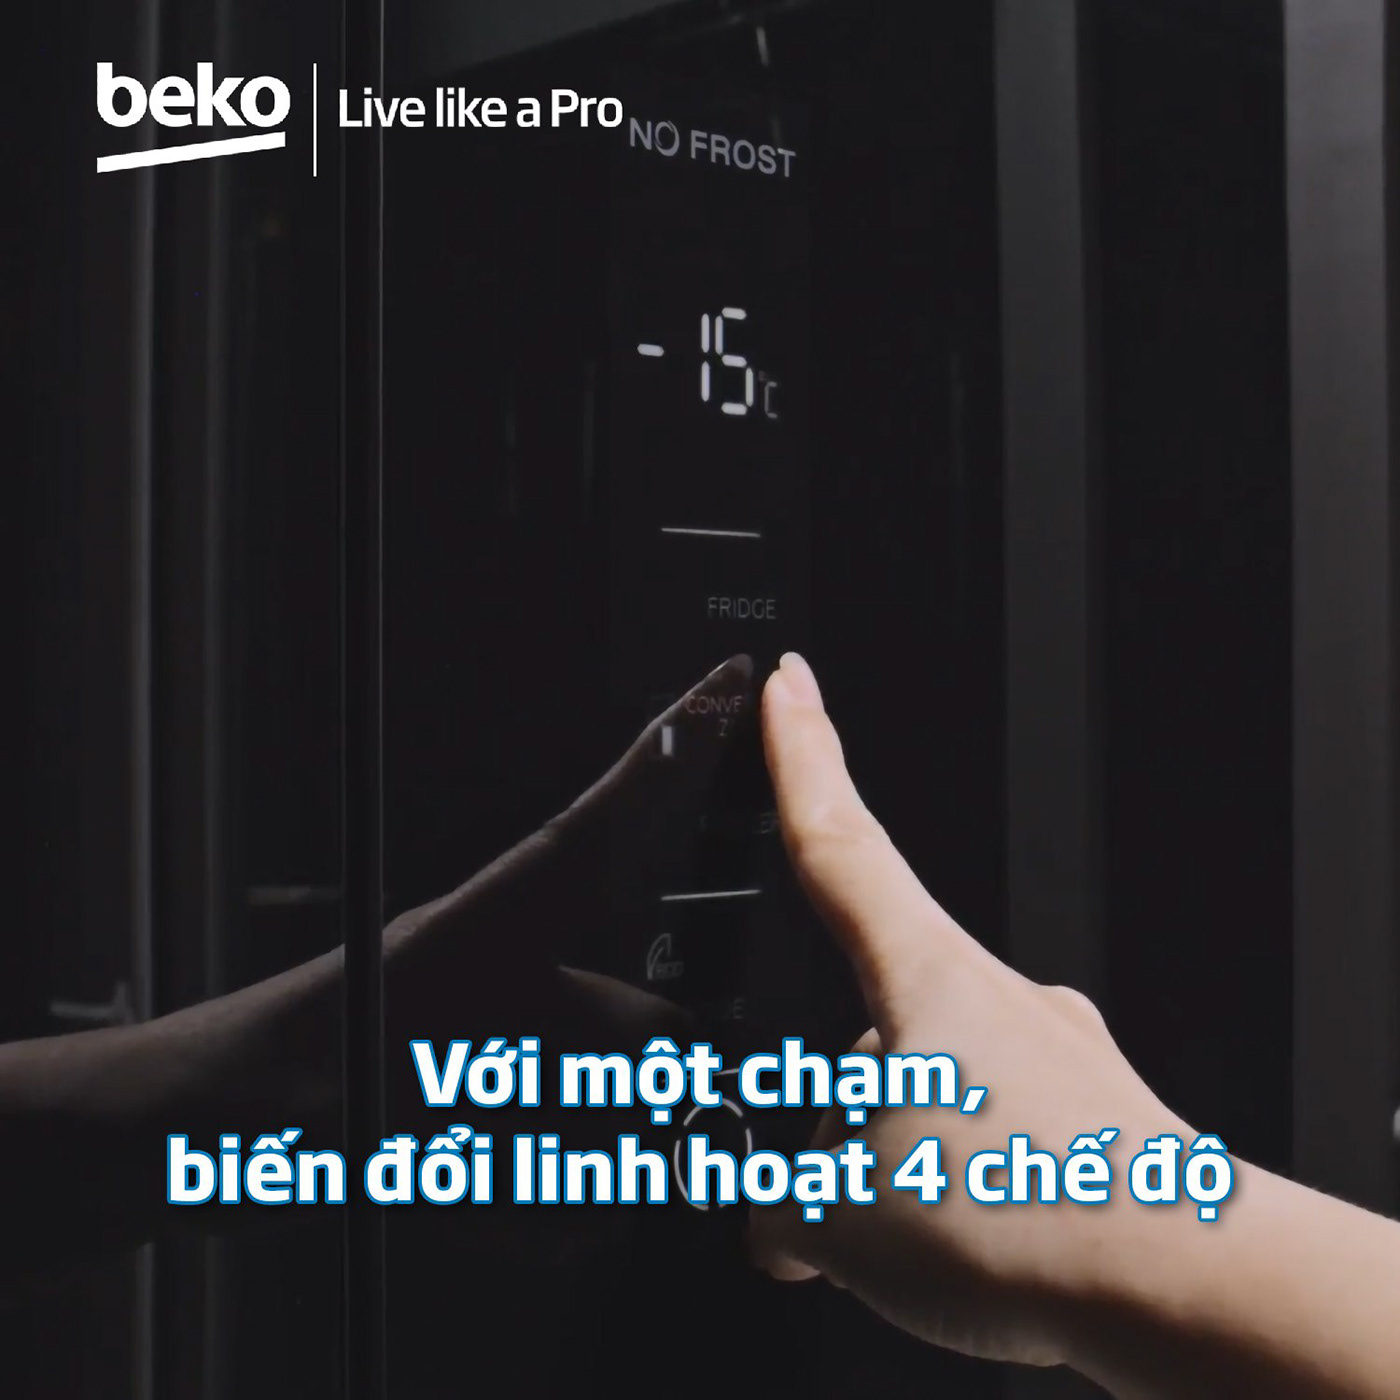 ads Advertising  beko family fridge kitchen marketing   refrigerator Social media post stopmotion